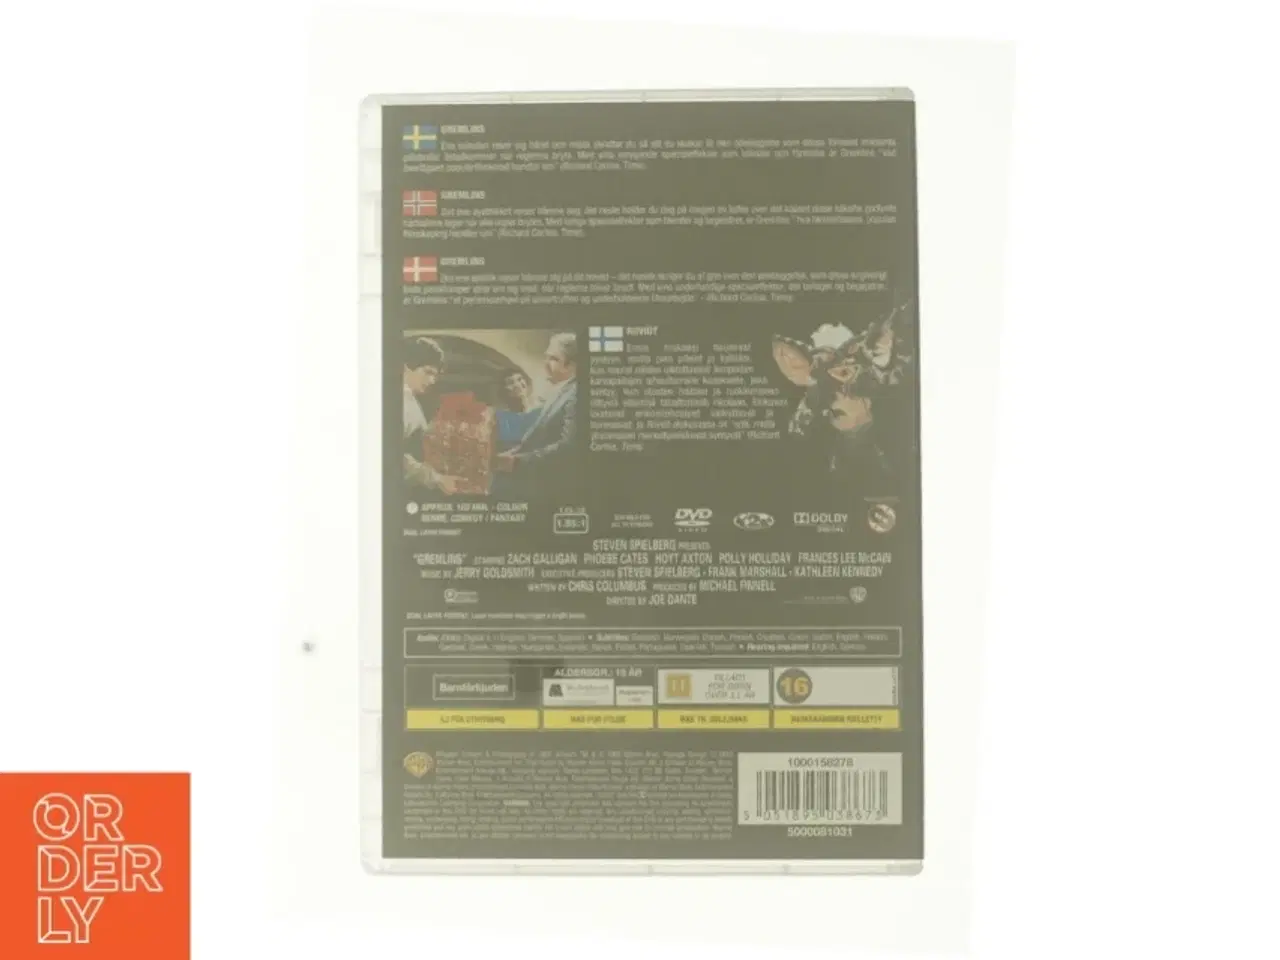 Billede 3 - Gremlins (Dvd / S/N)                            <span class="label label-blank pull-right">Standard edition</span> fra DVD